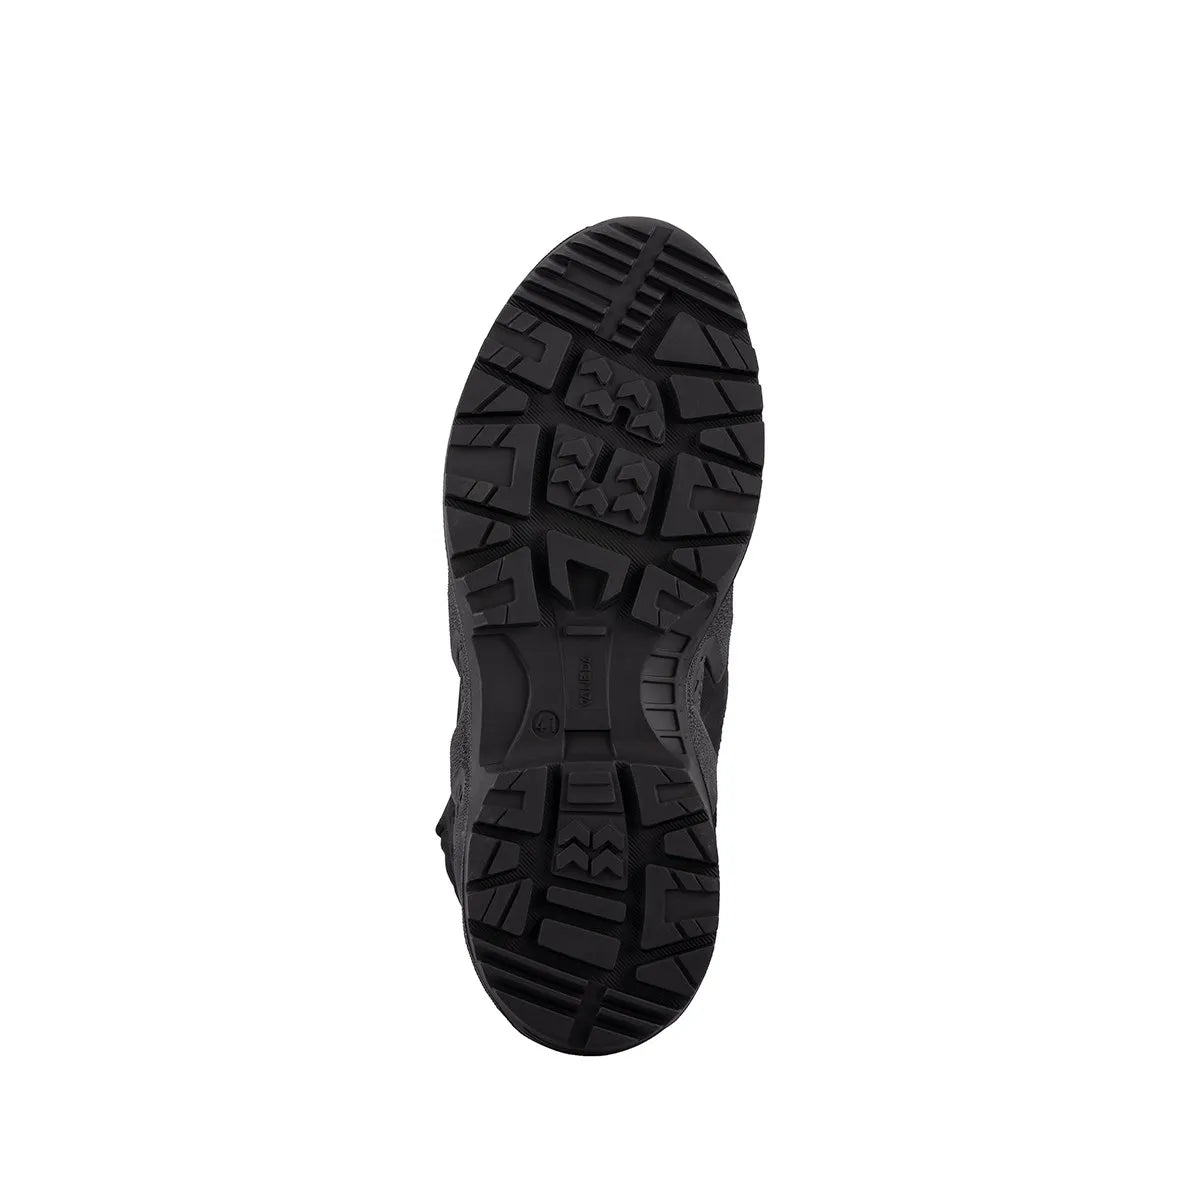 Vaneda 1192 Pro Black Tactical Boots Waterproof Breathable Nubuck Outdoor Men Women Hiking Shoes Hunting Drytex Light weight